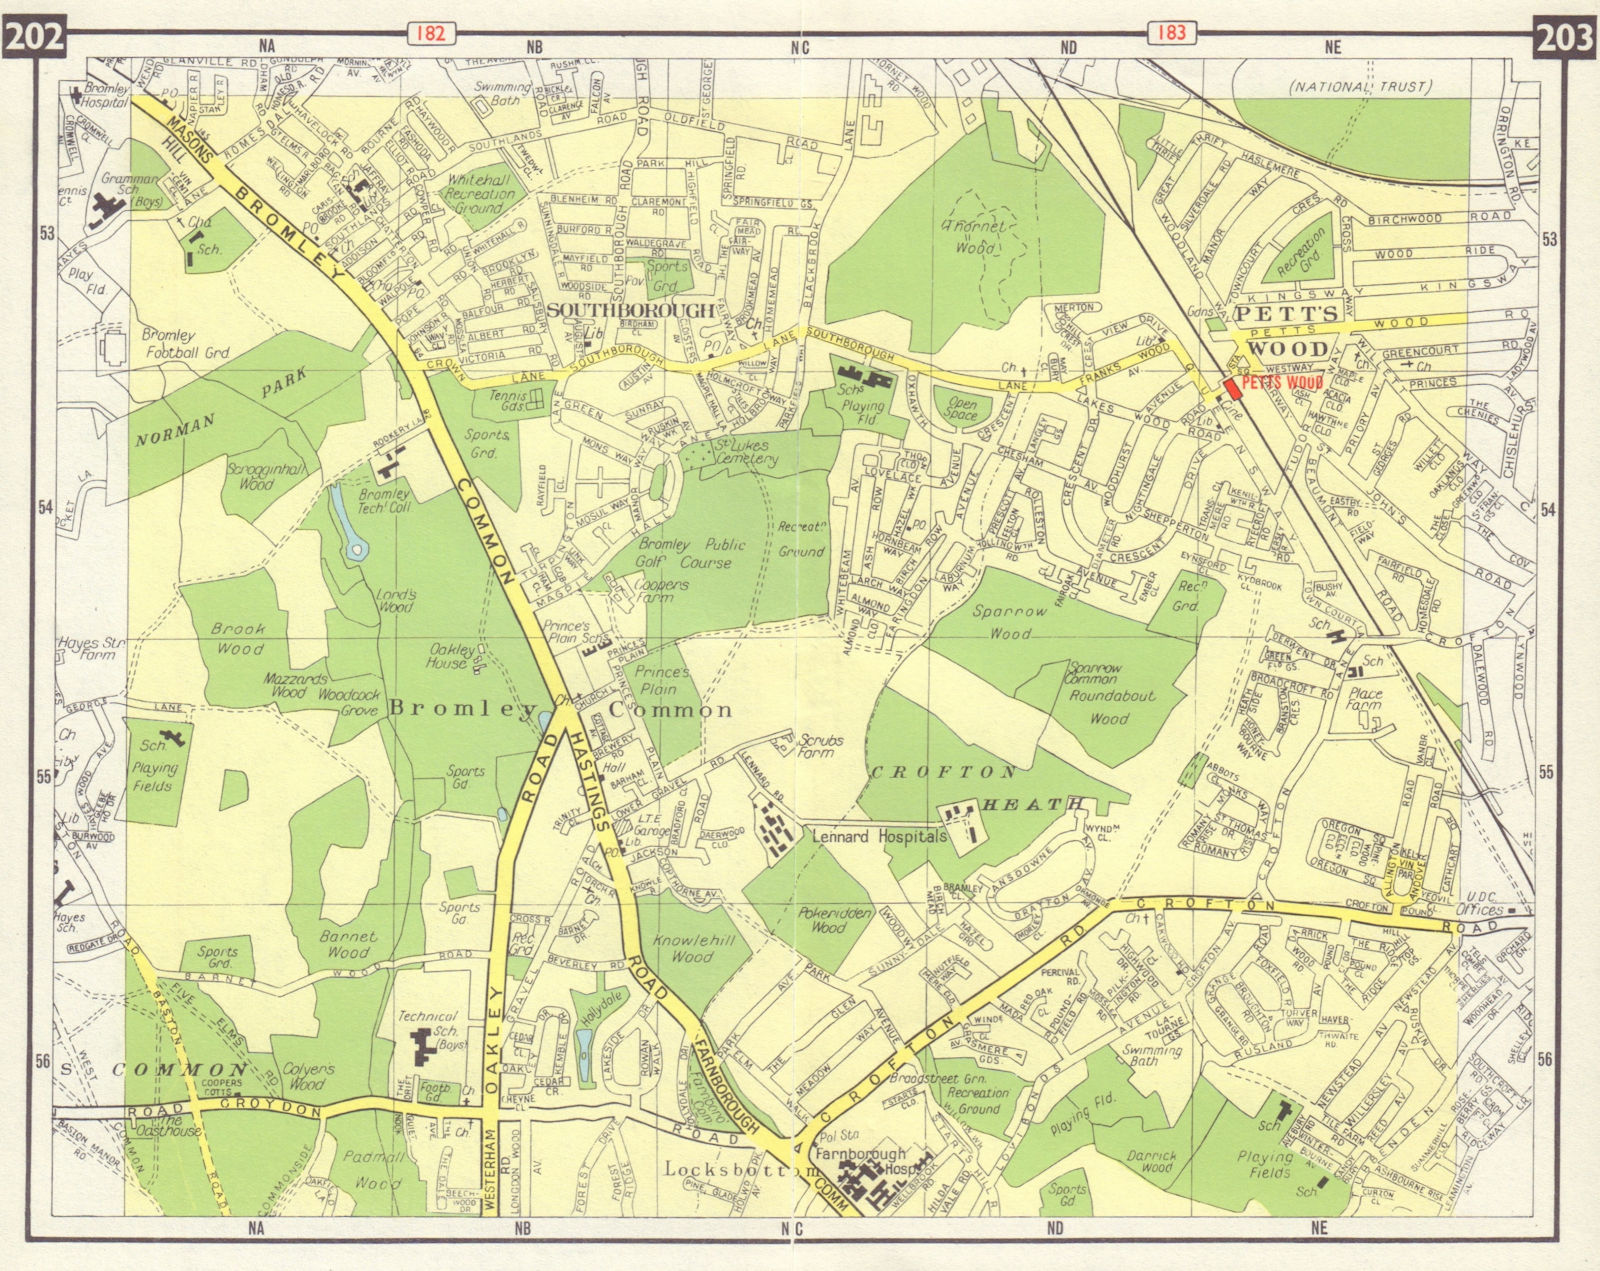 Associate Product SE LONDON Petts Wood Locksbottom Southborough Bromley Common Bickley 1965 map